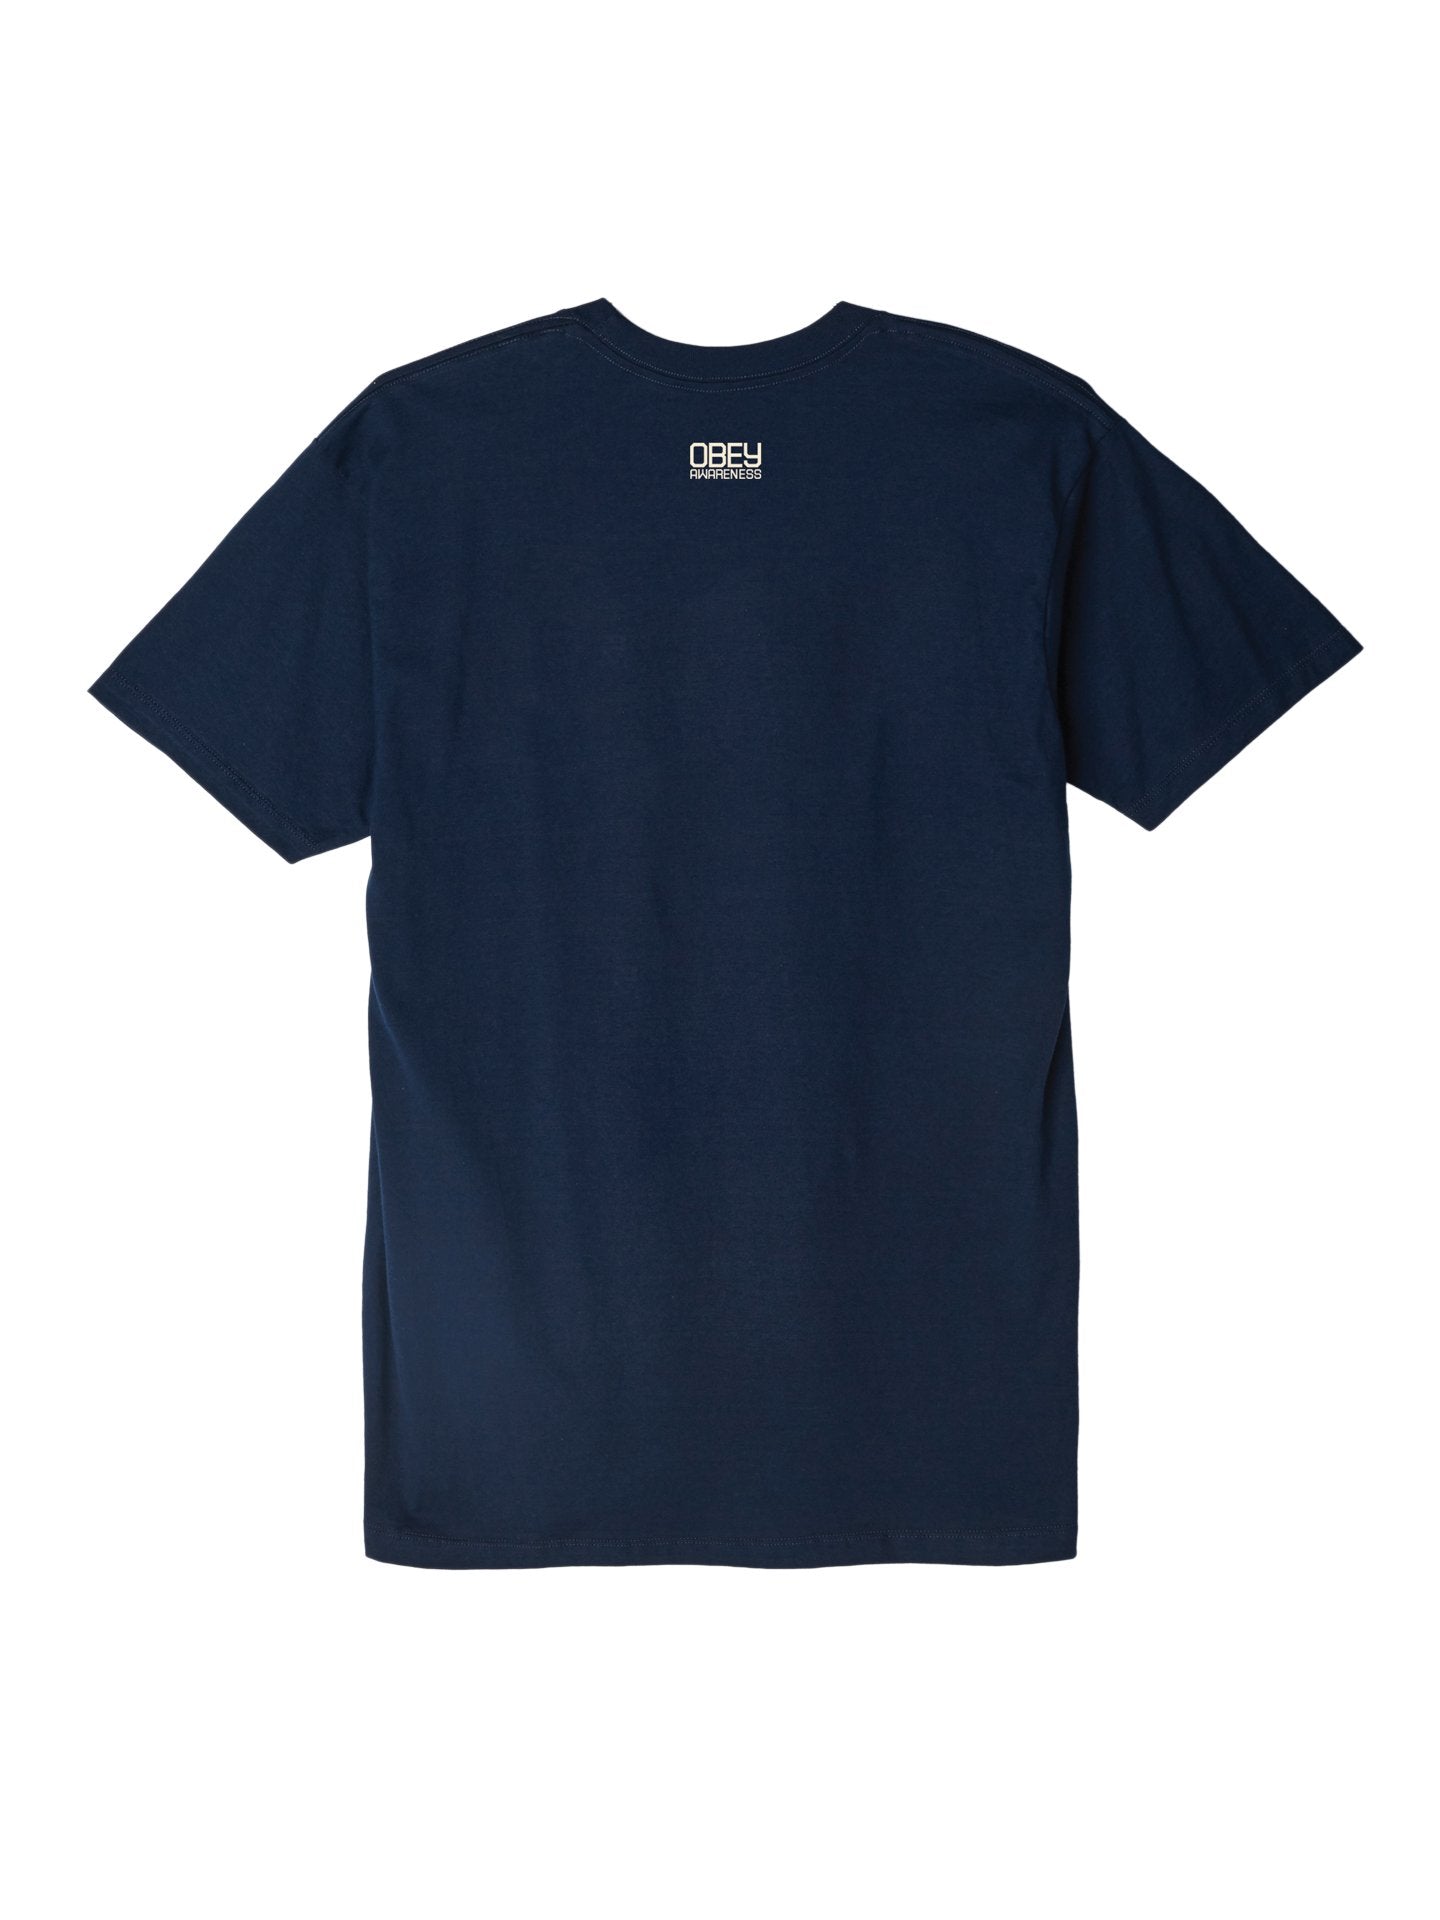 OBEY- Children Inc. Men's Shirt, Navy - The Giant Peach